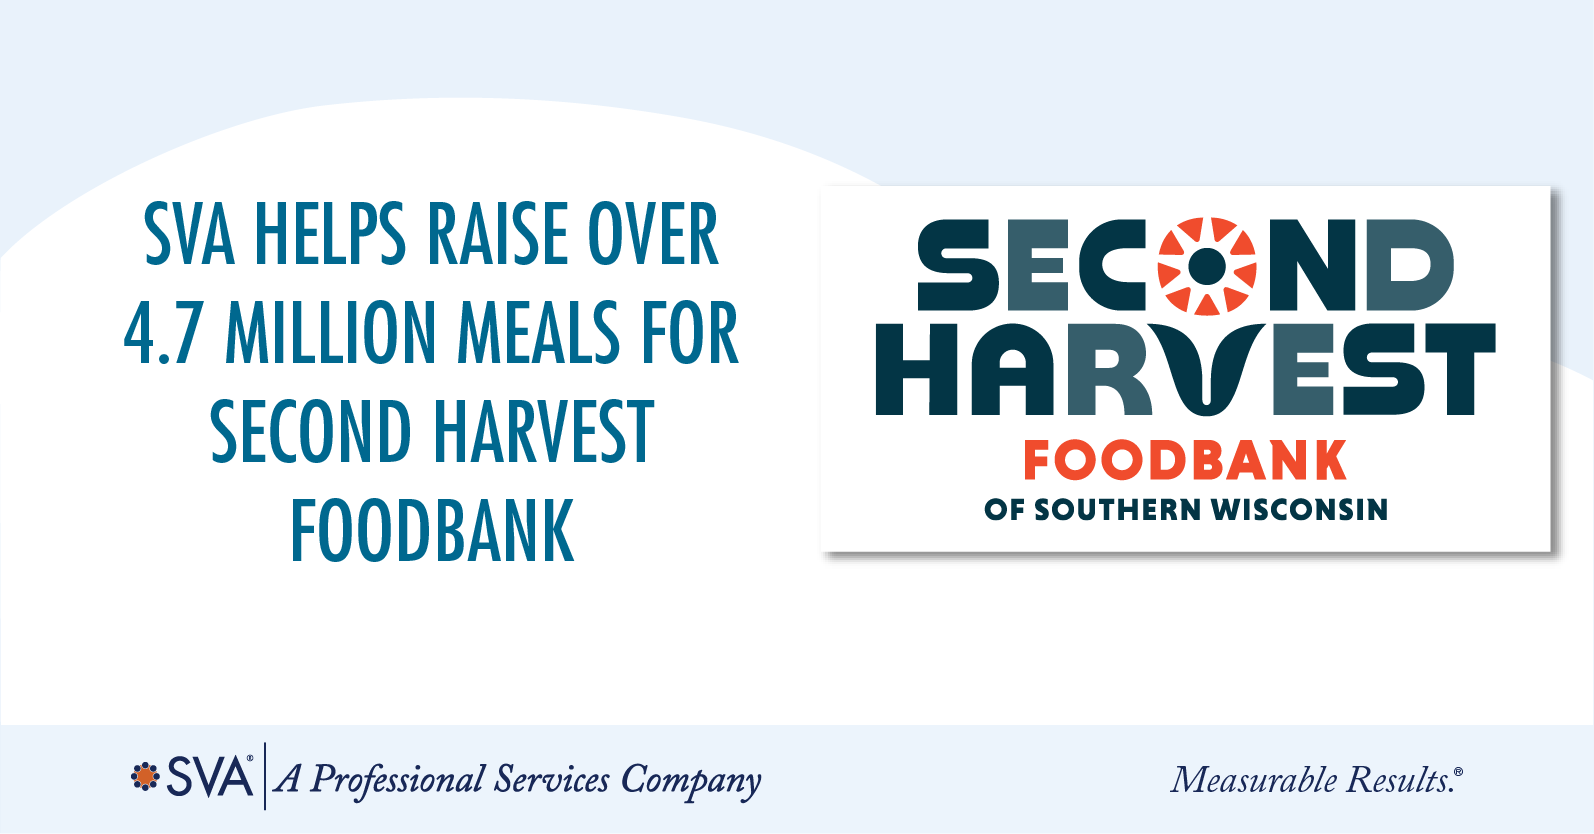 SVA Helps Raise Over 4.7 Million Meals for Second Harvest Foodbank